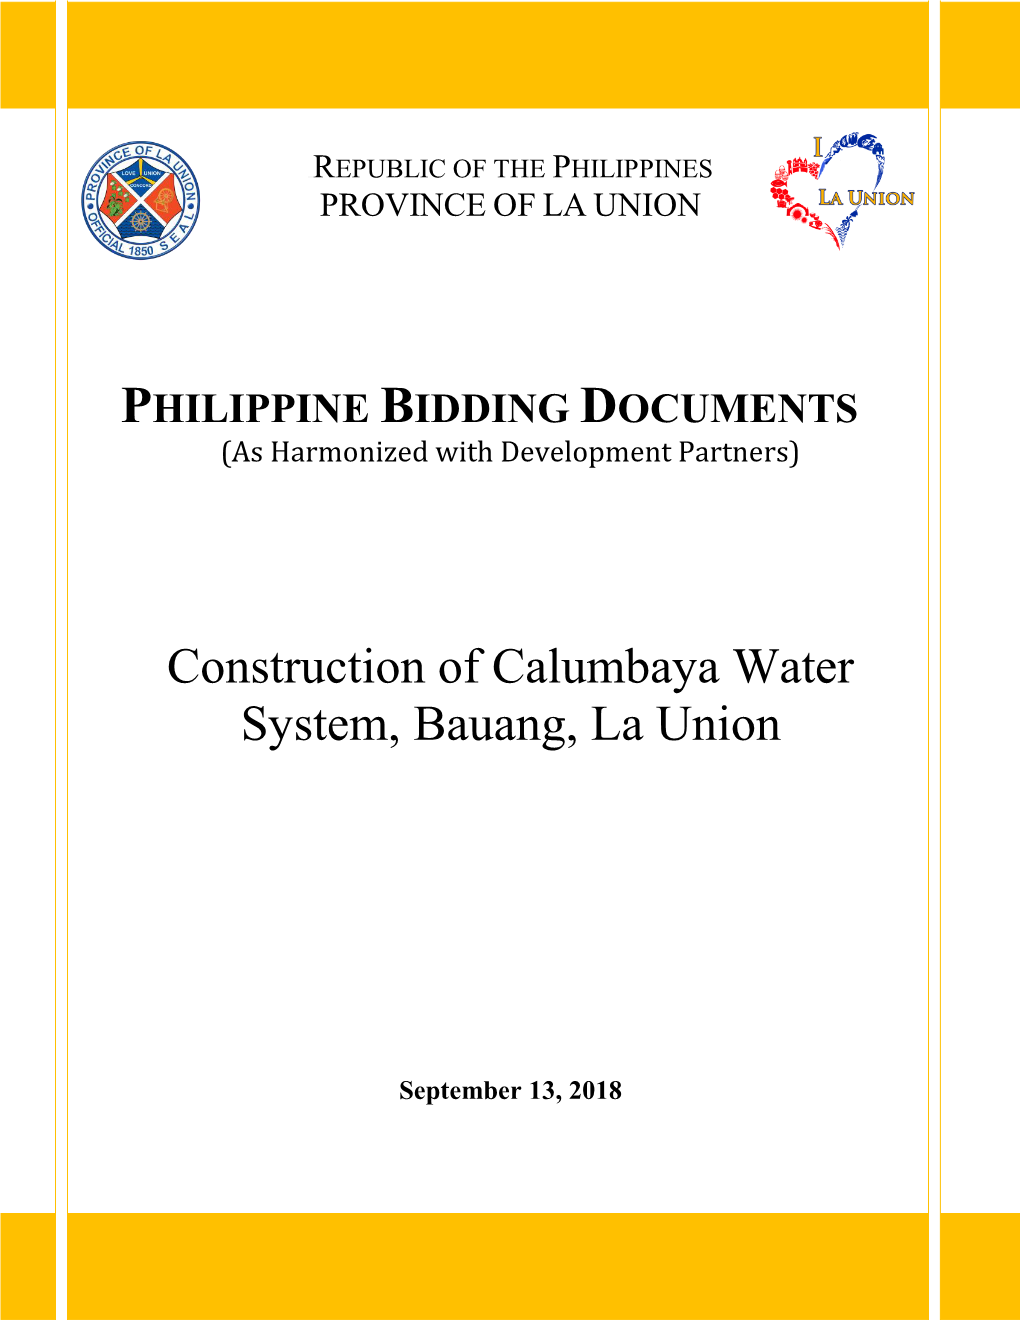 Construction of Calumbaya Water System, Bauang, La Union